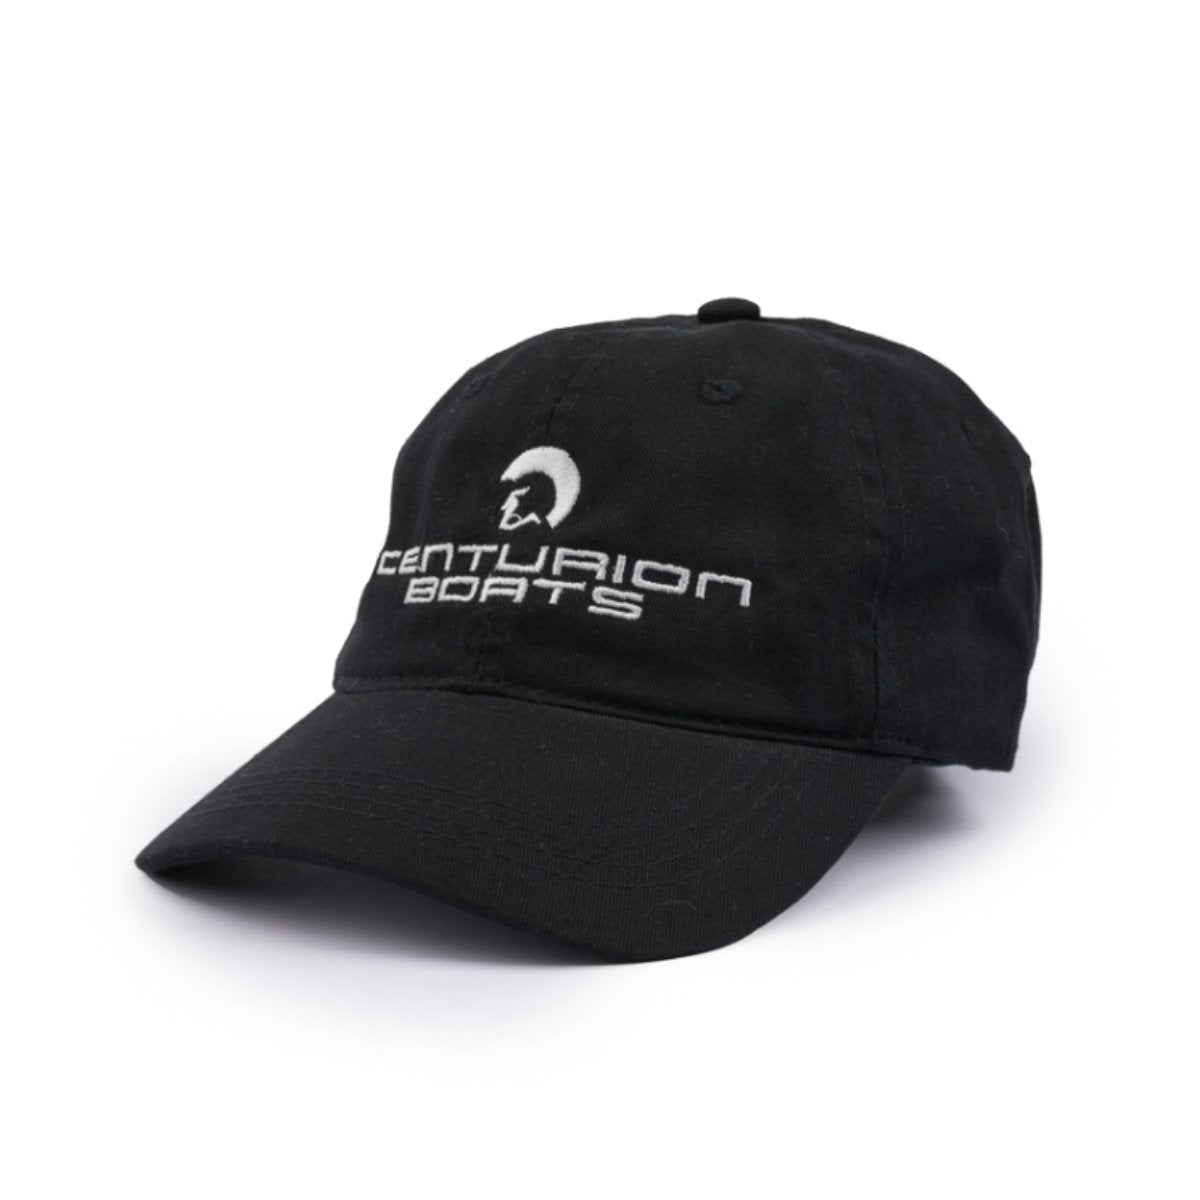 Centurion Washed Twill Cap in Black - BoardCo